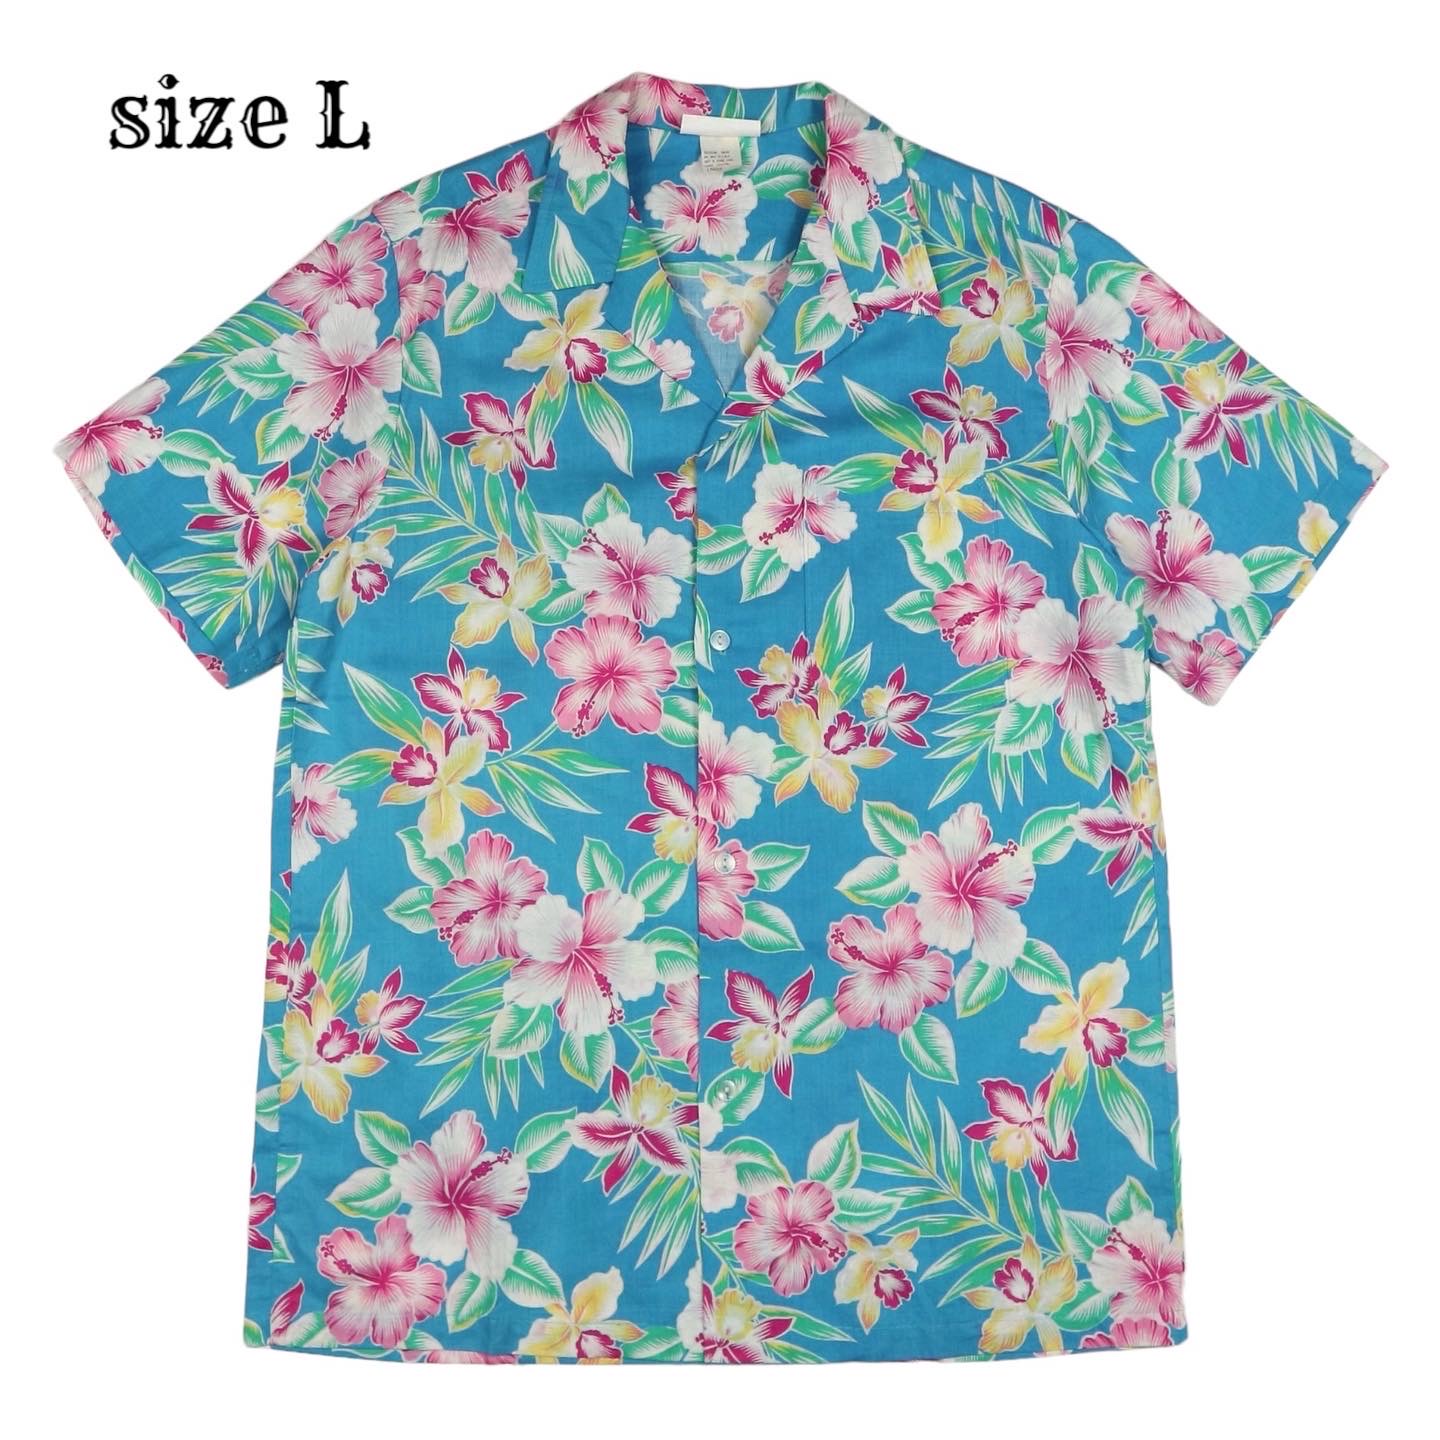 Stephen Hawaiian Shirt Size L